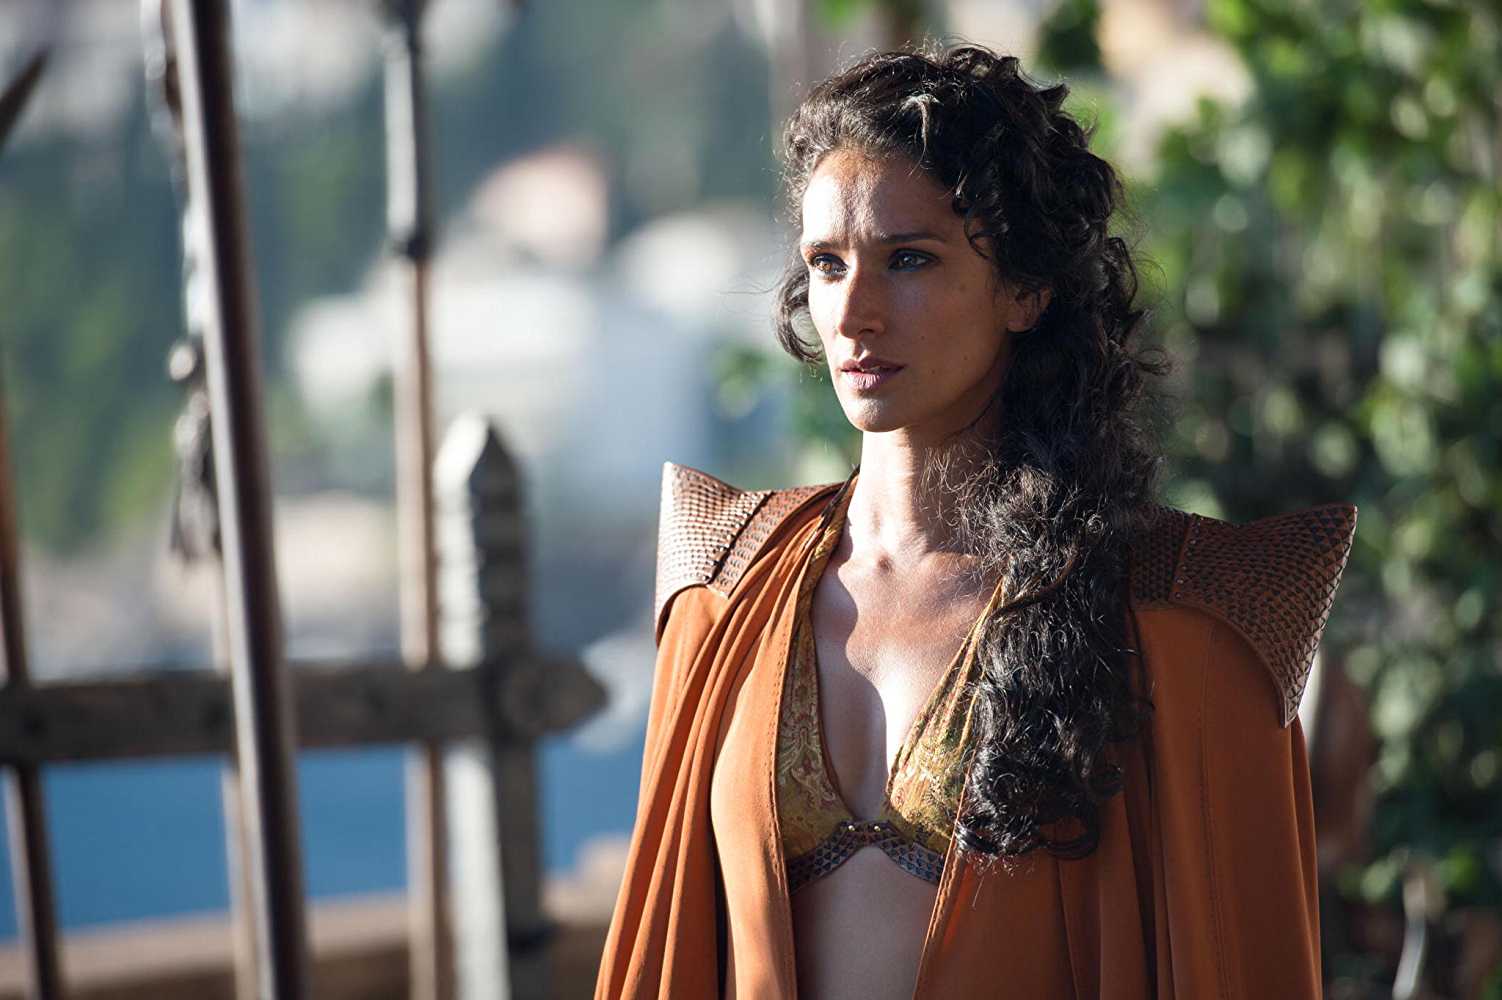 Indira Varma as Ellaria Sand in 'Game of Thrones'.
(Source: IMDB)